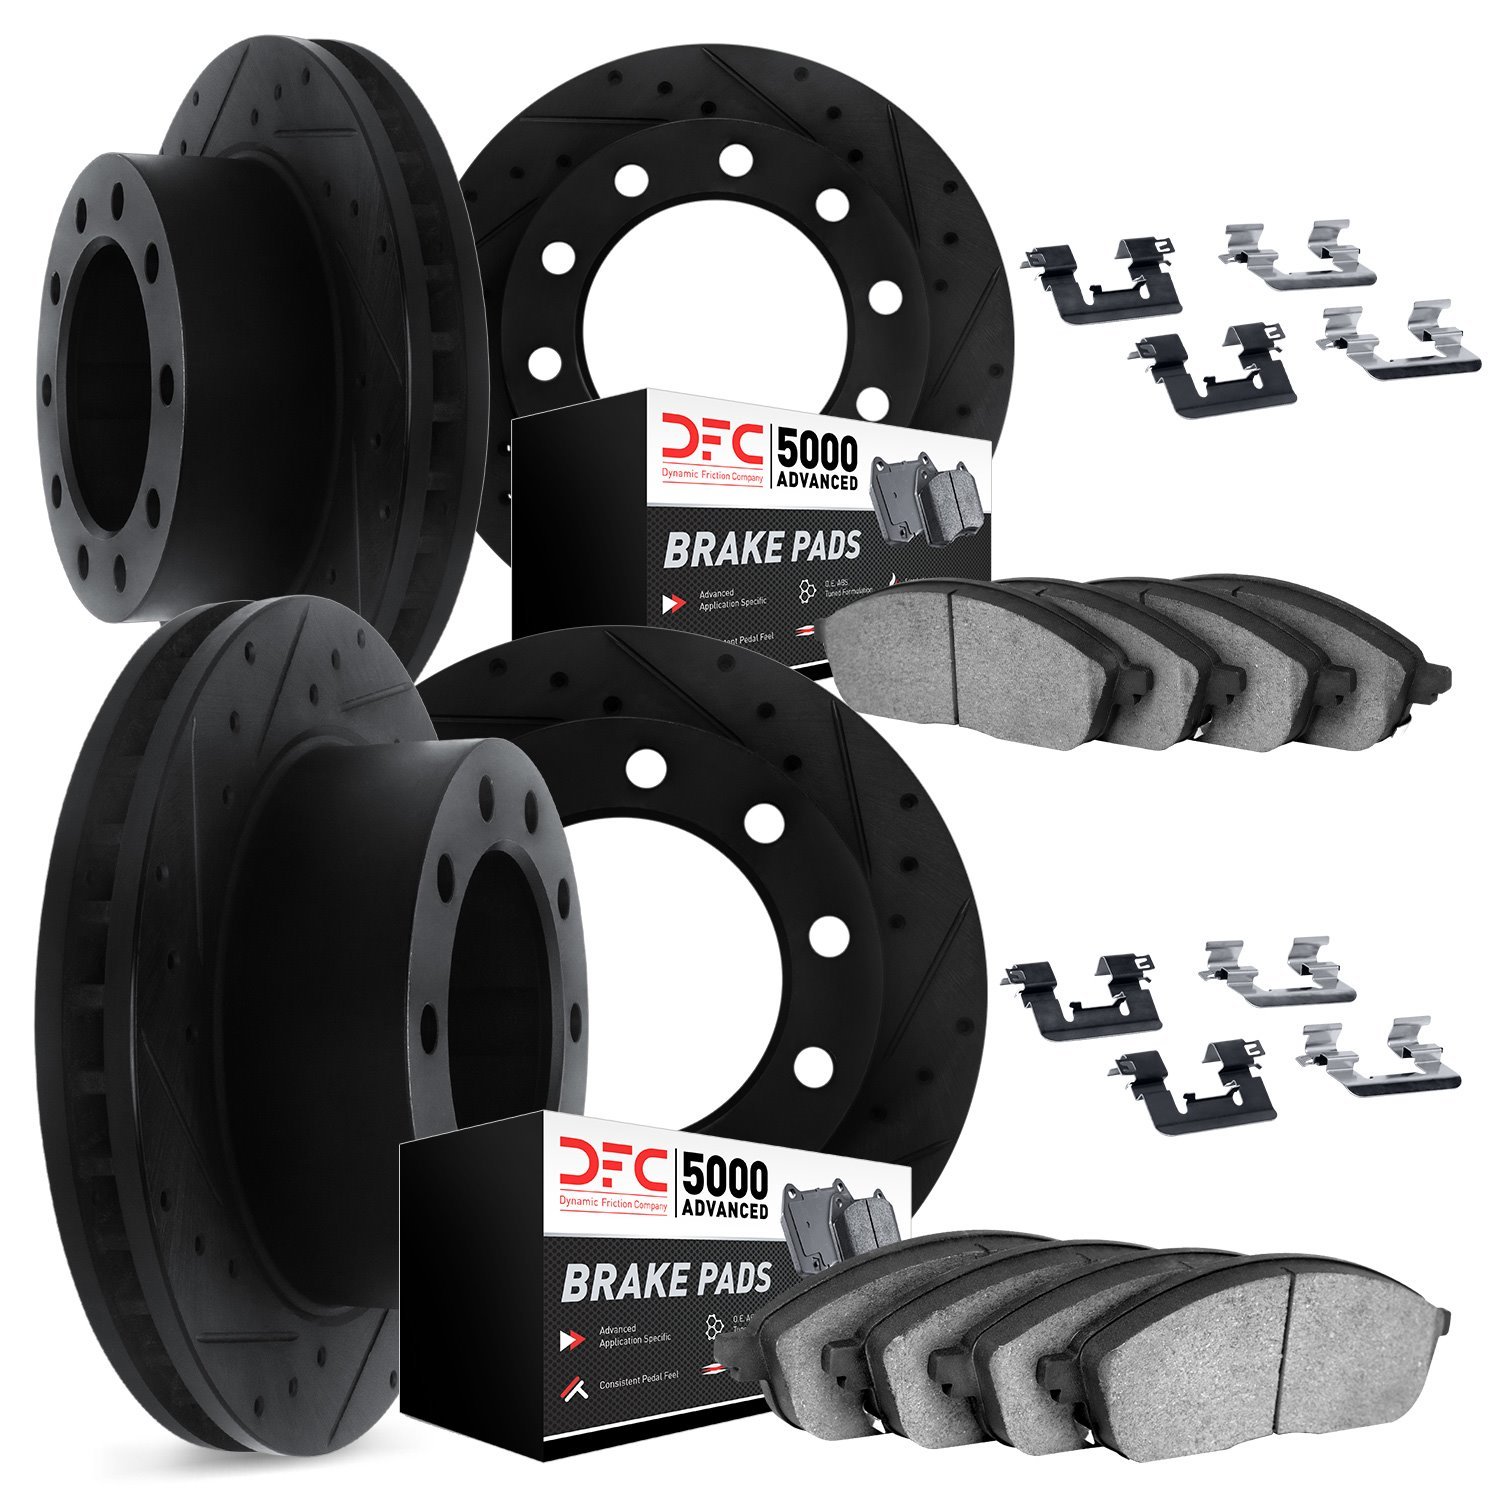 8514-99741 Drilled/Slotted Brake Rotors w/5000 Advanced Brake Pads Kit & Hardware [Black], Fits Select Multiple Makes/Models, Po